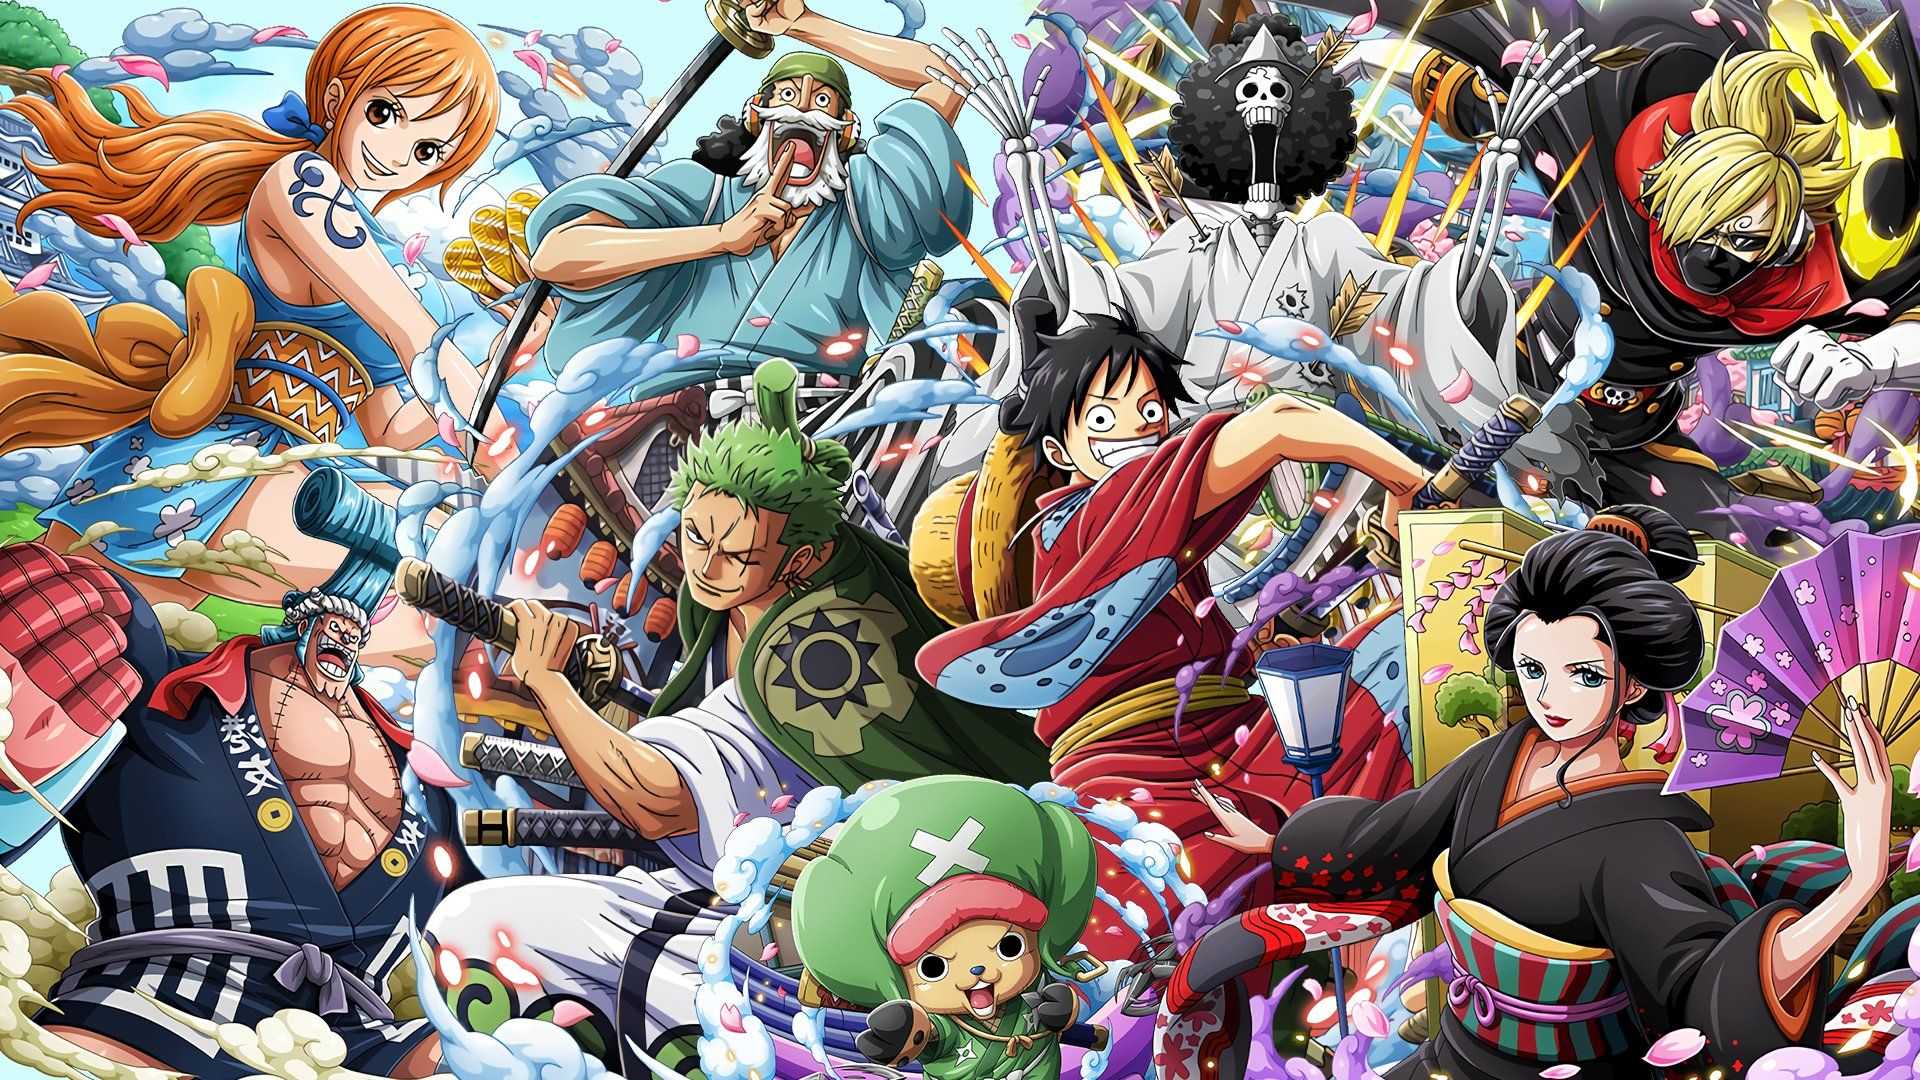 Free One Piece Desktop Wallpaper Downloads 100 One Piece Desktop  Wallpapers for FREE  Wallpaperscom